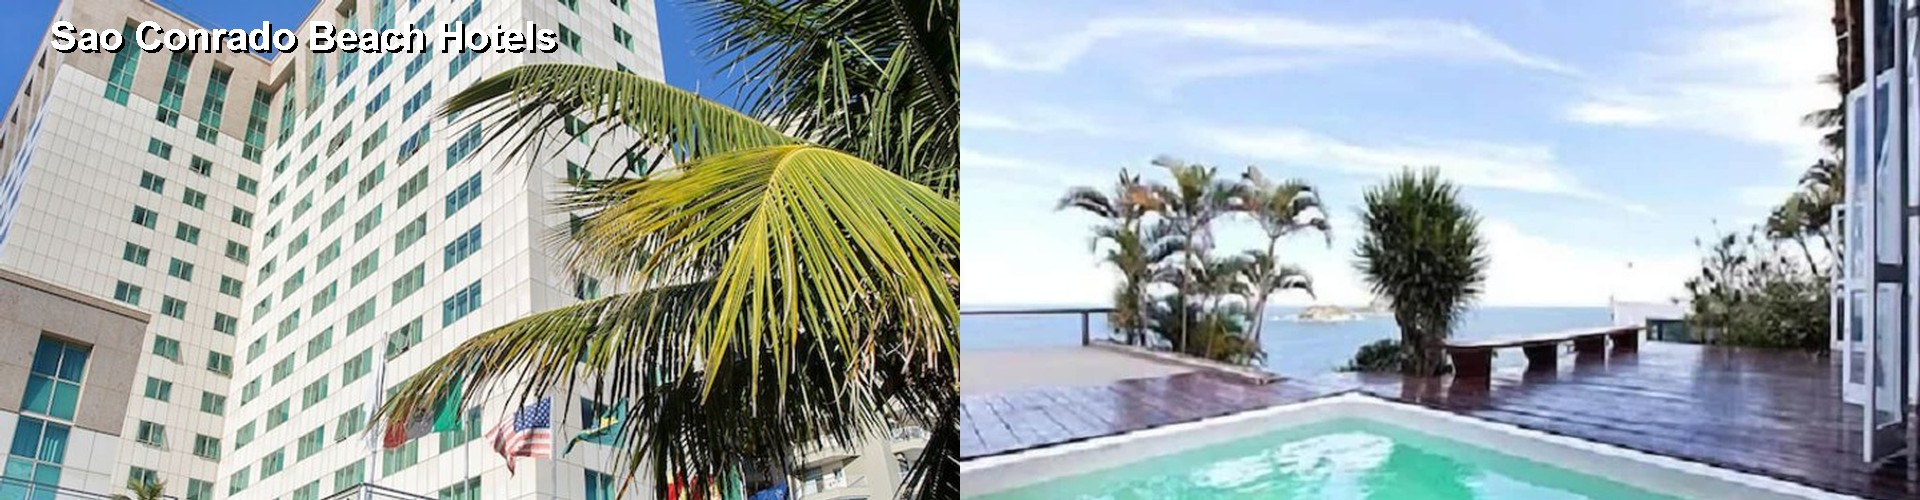 5 Best Hotels near Sao Conrado Beach